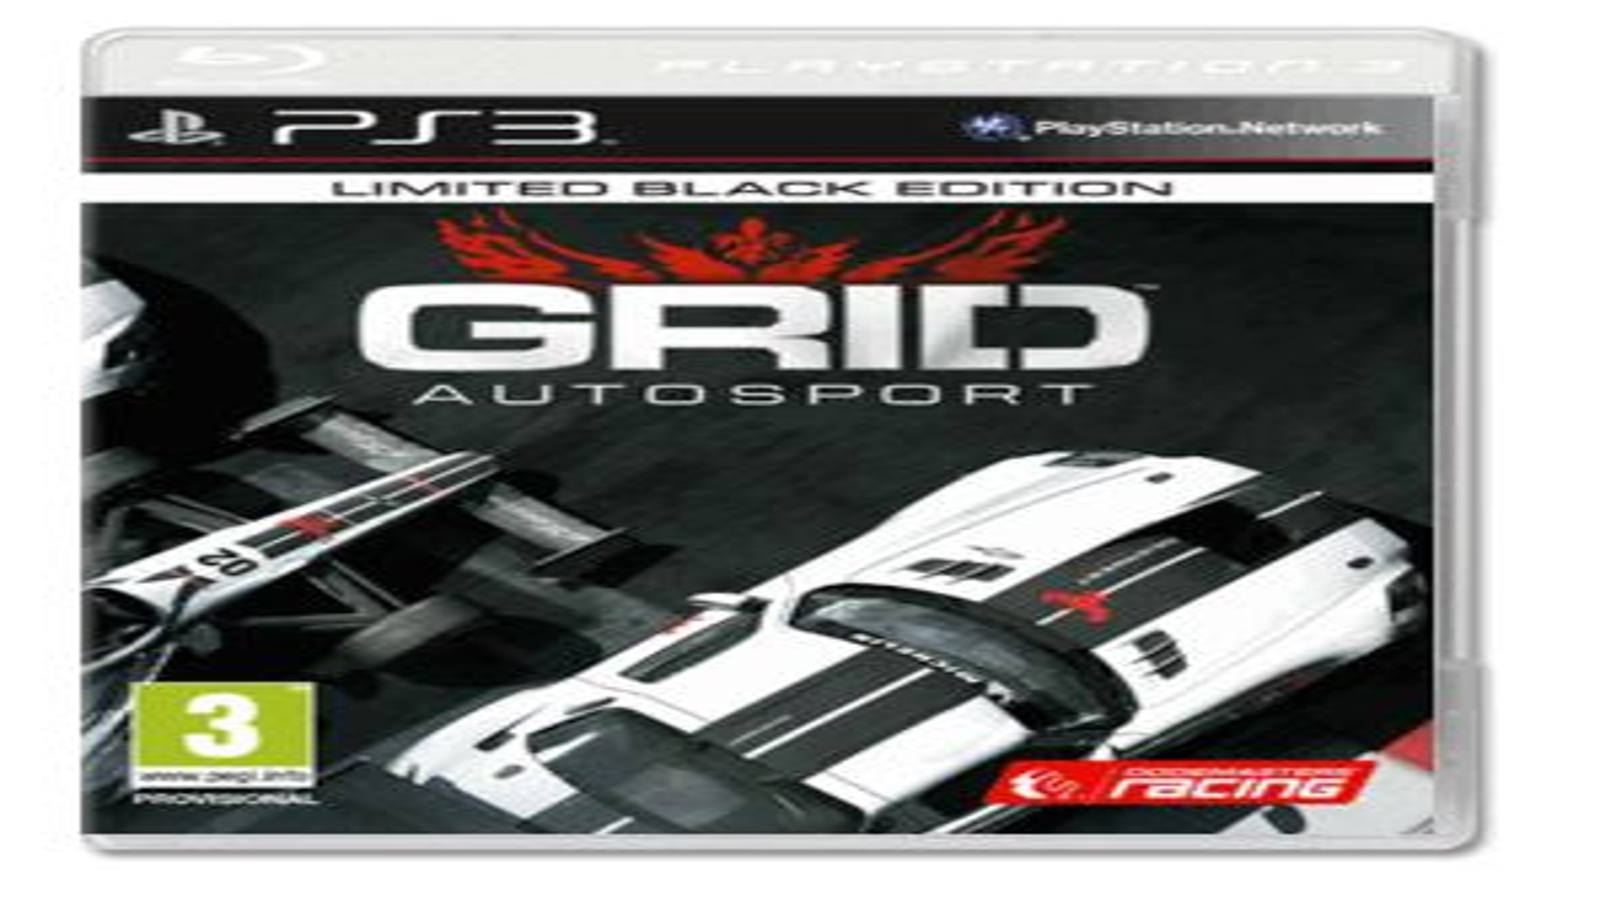 Jogo Grid Autosport Limited Black Edition Pc Midia Fisica